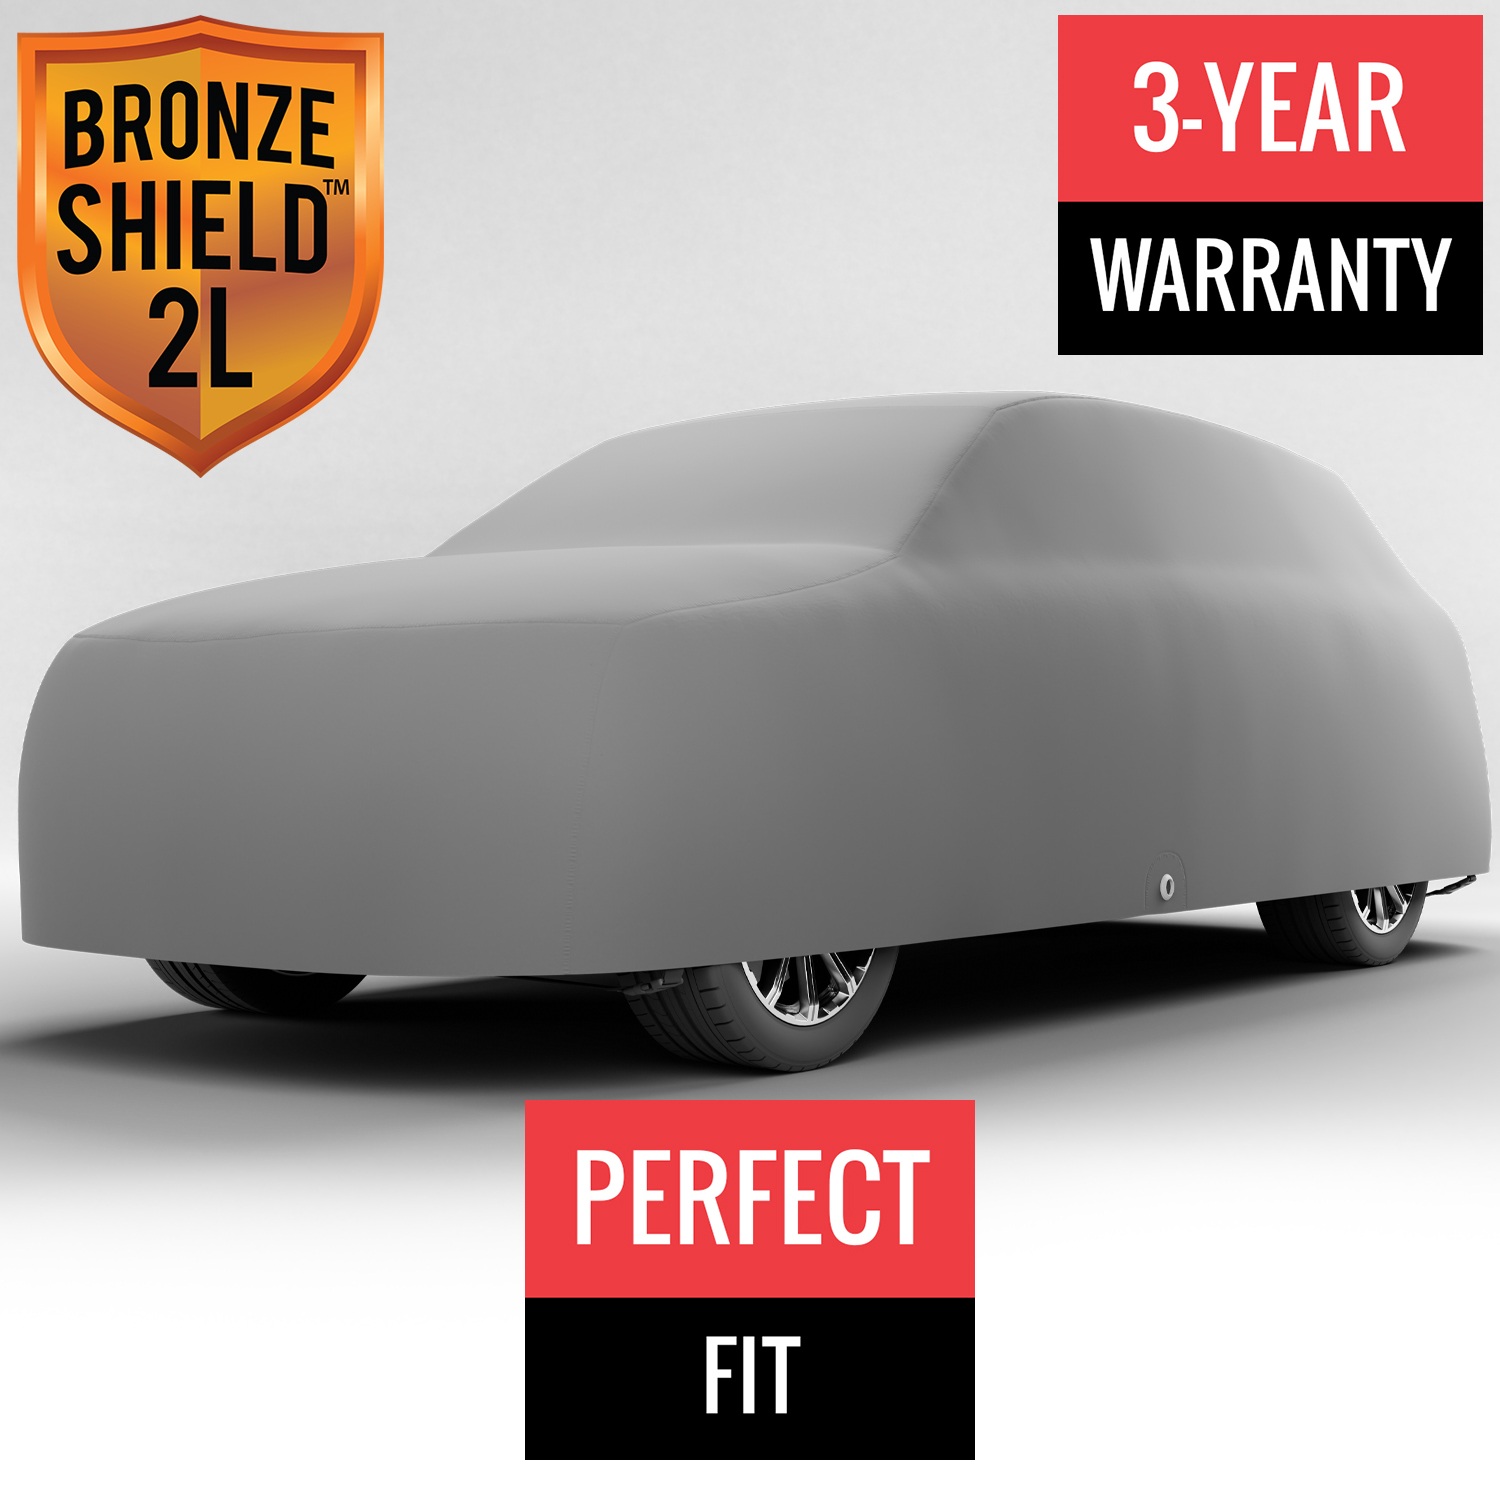 Bronze Shield 2L - Car Cover for Hyundai Palisade 2019 SUV 4-Door